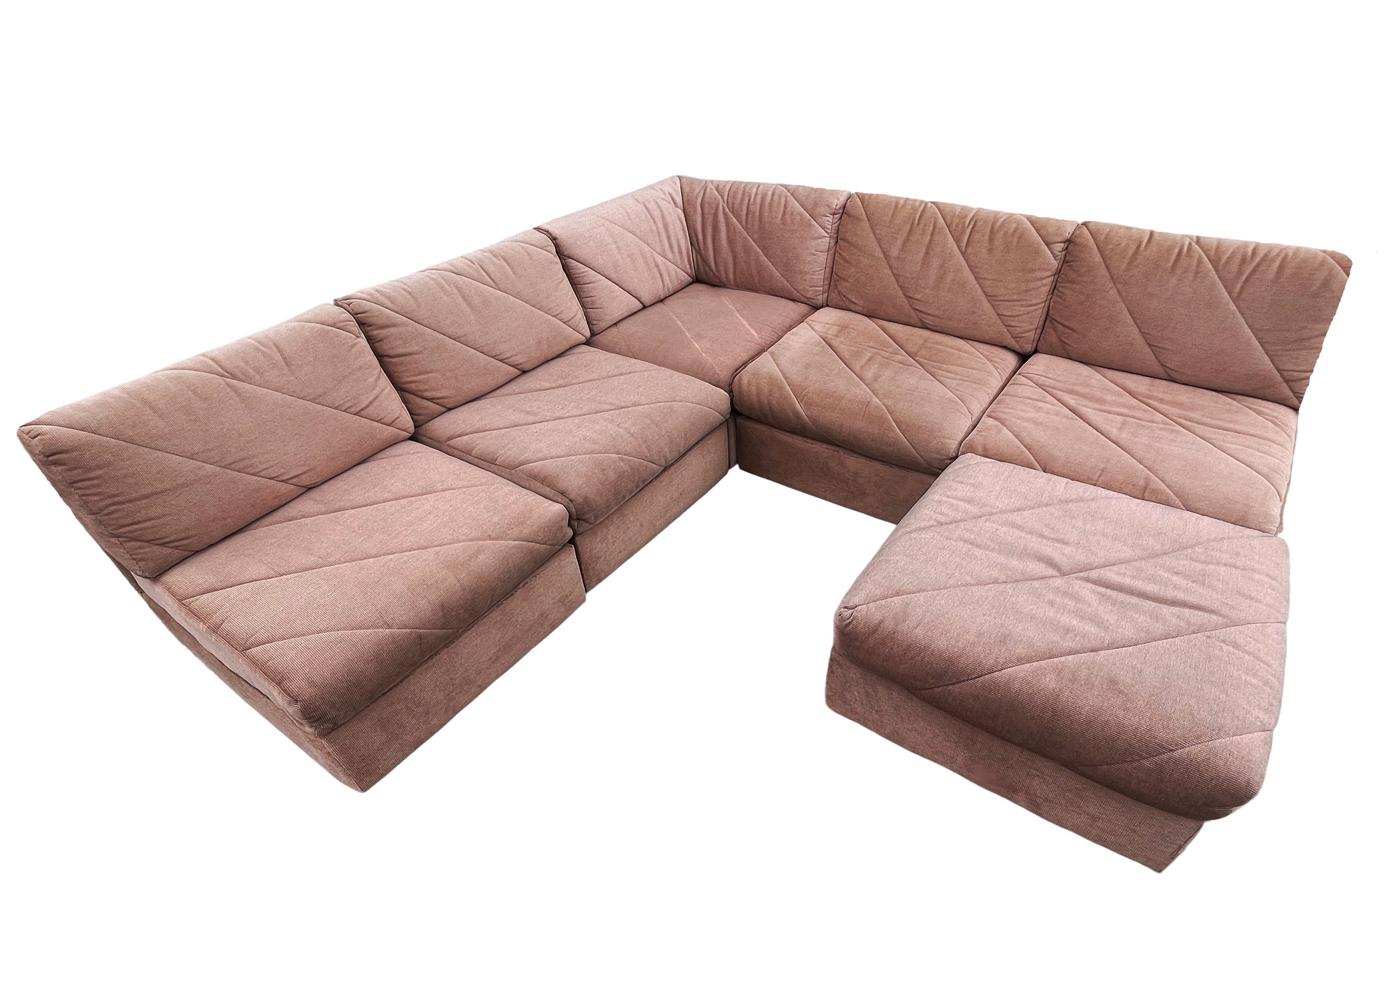 boxy sectional sofa